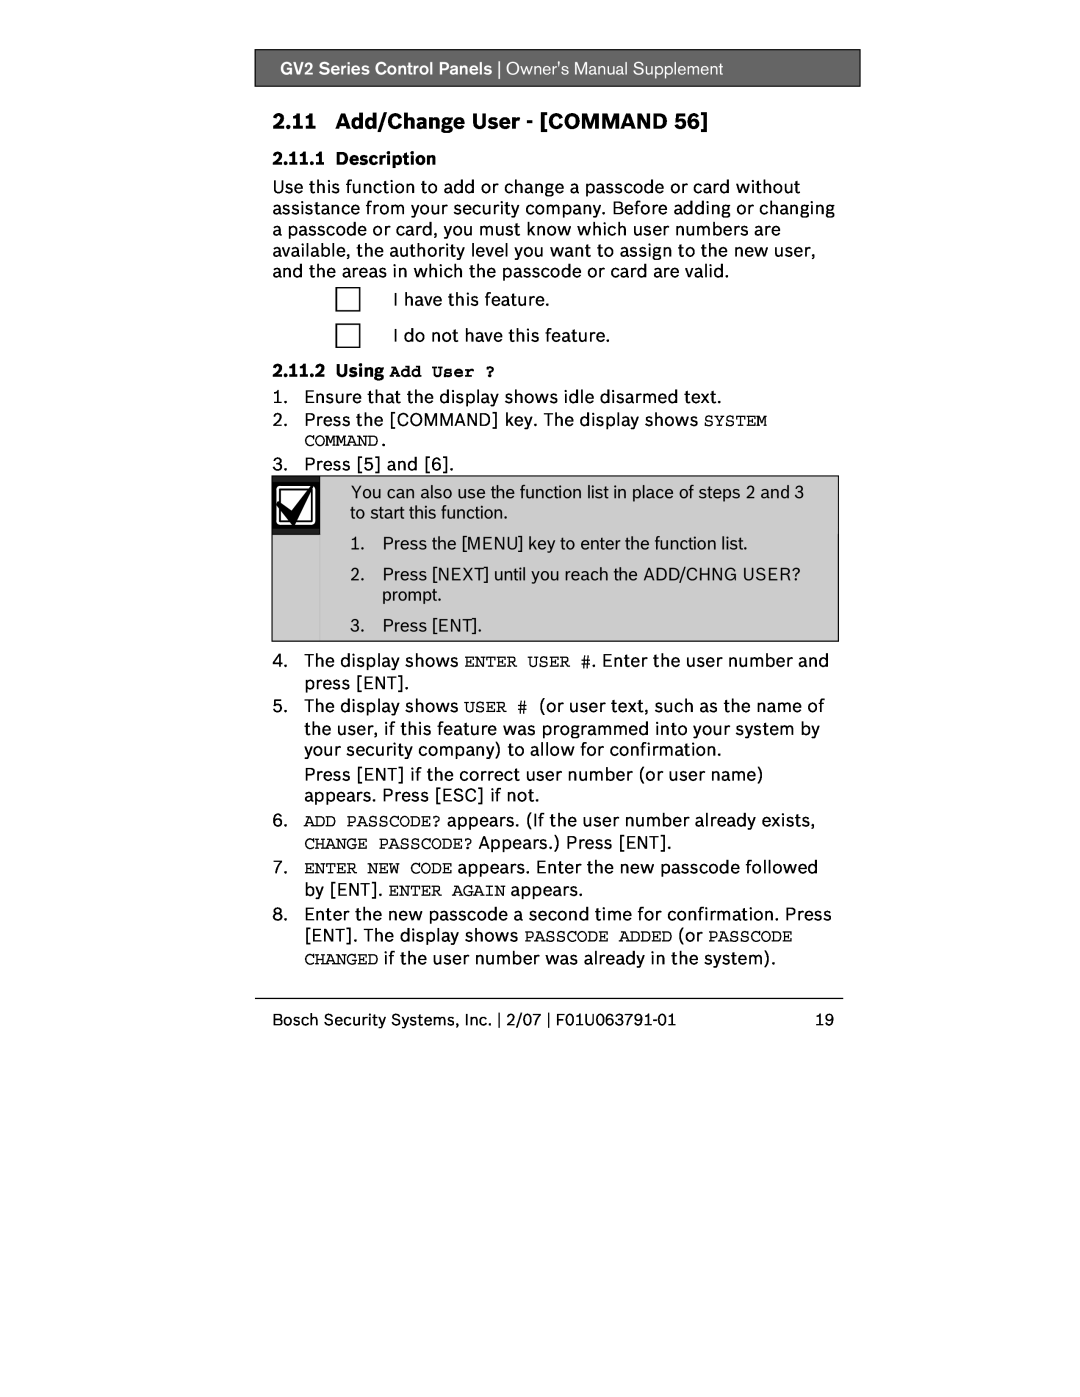 Bosch Appliances GV2 owner manual 2.11 Add/Change User - COMMAND, Description, 2.11.2Using Add User ? 